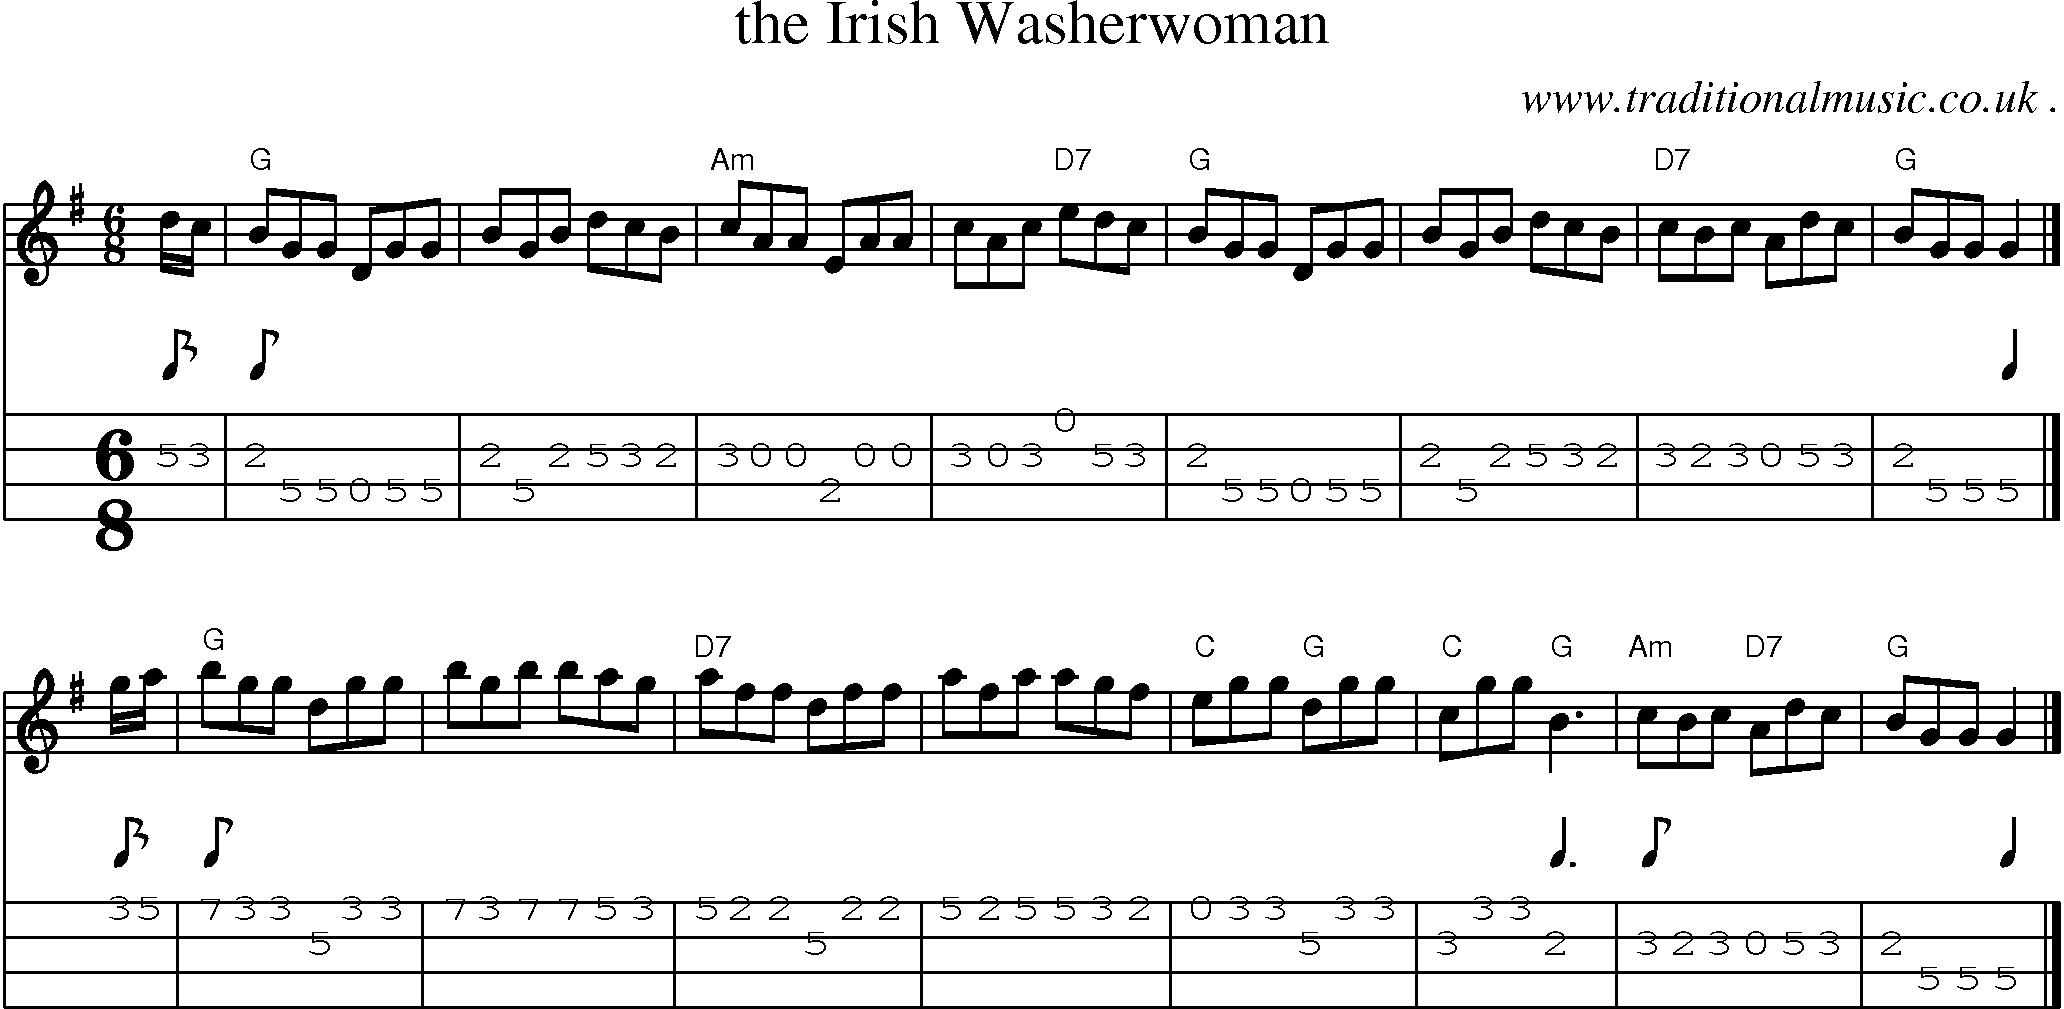 Sheet-music  score, Chords and Mandolin Tabs for The Irish Washerwoman